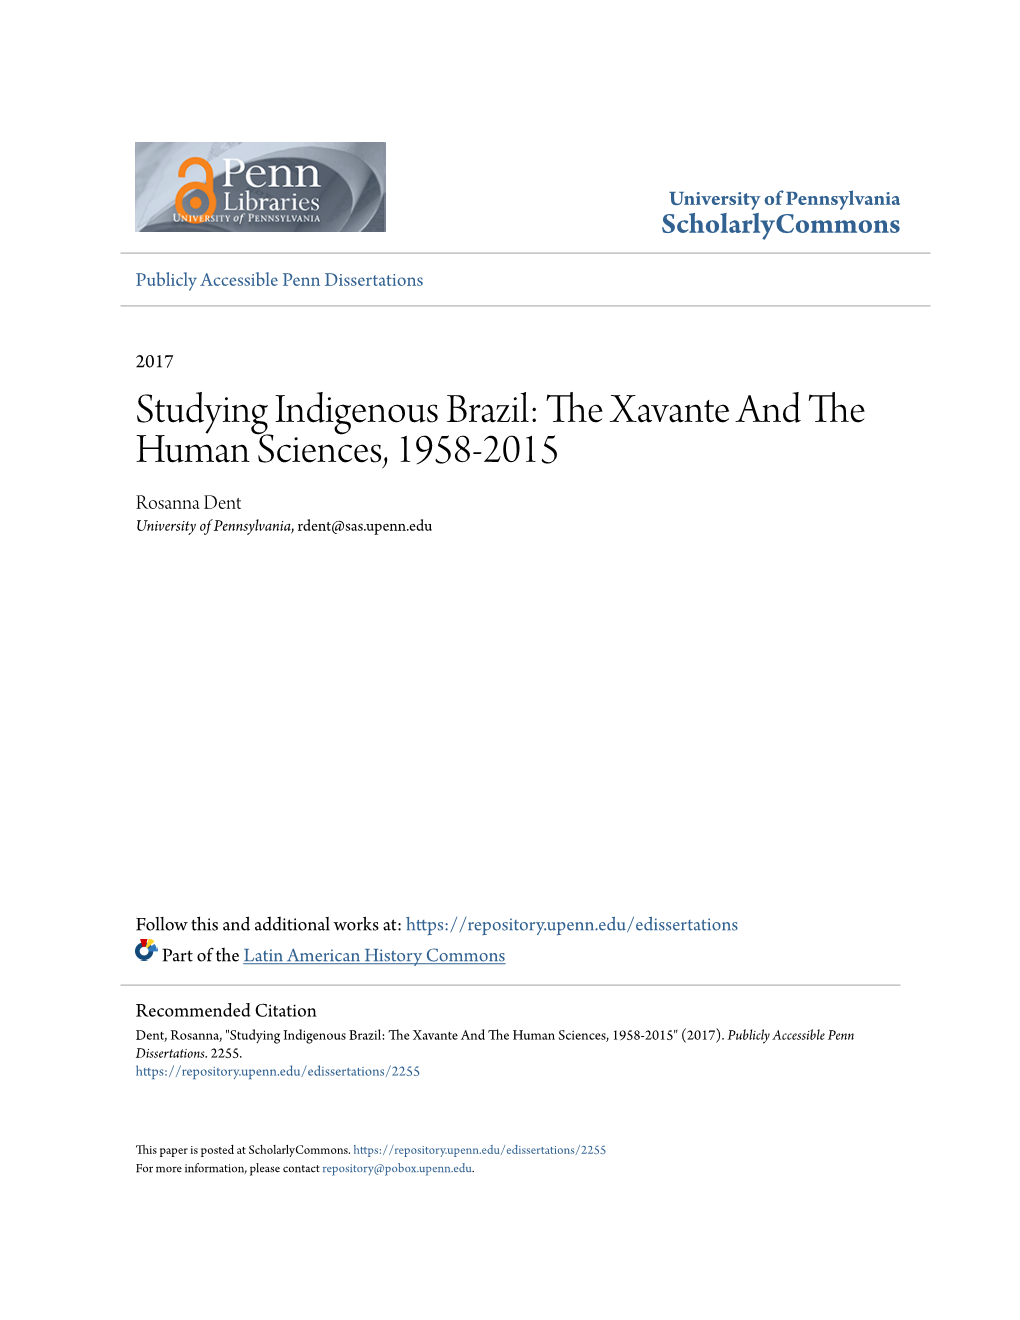 Studying Indigenous Brazil: the Xavante and the Human Sciences, 1958-2015 Rosanna Dent University of Pennsylvania, Rdent@Sas.Upenn.Edu